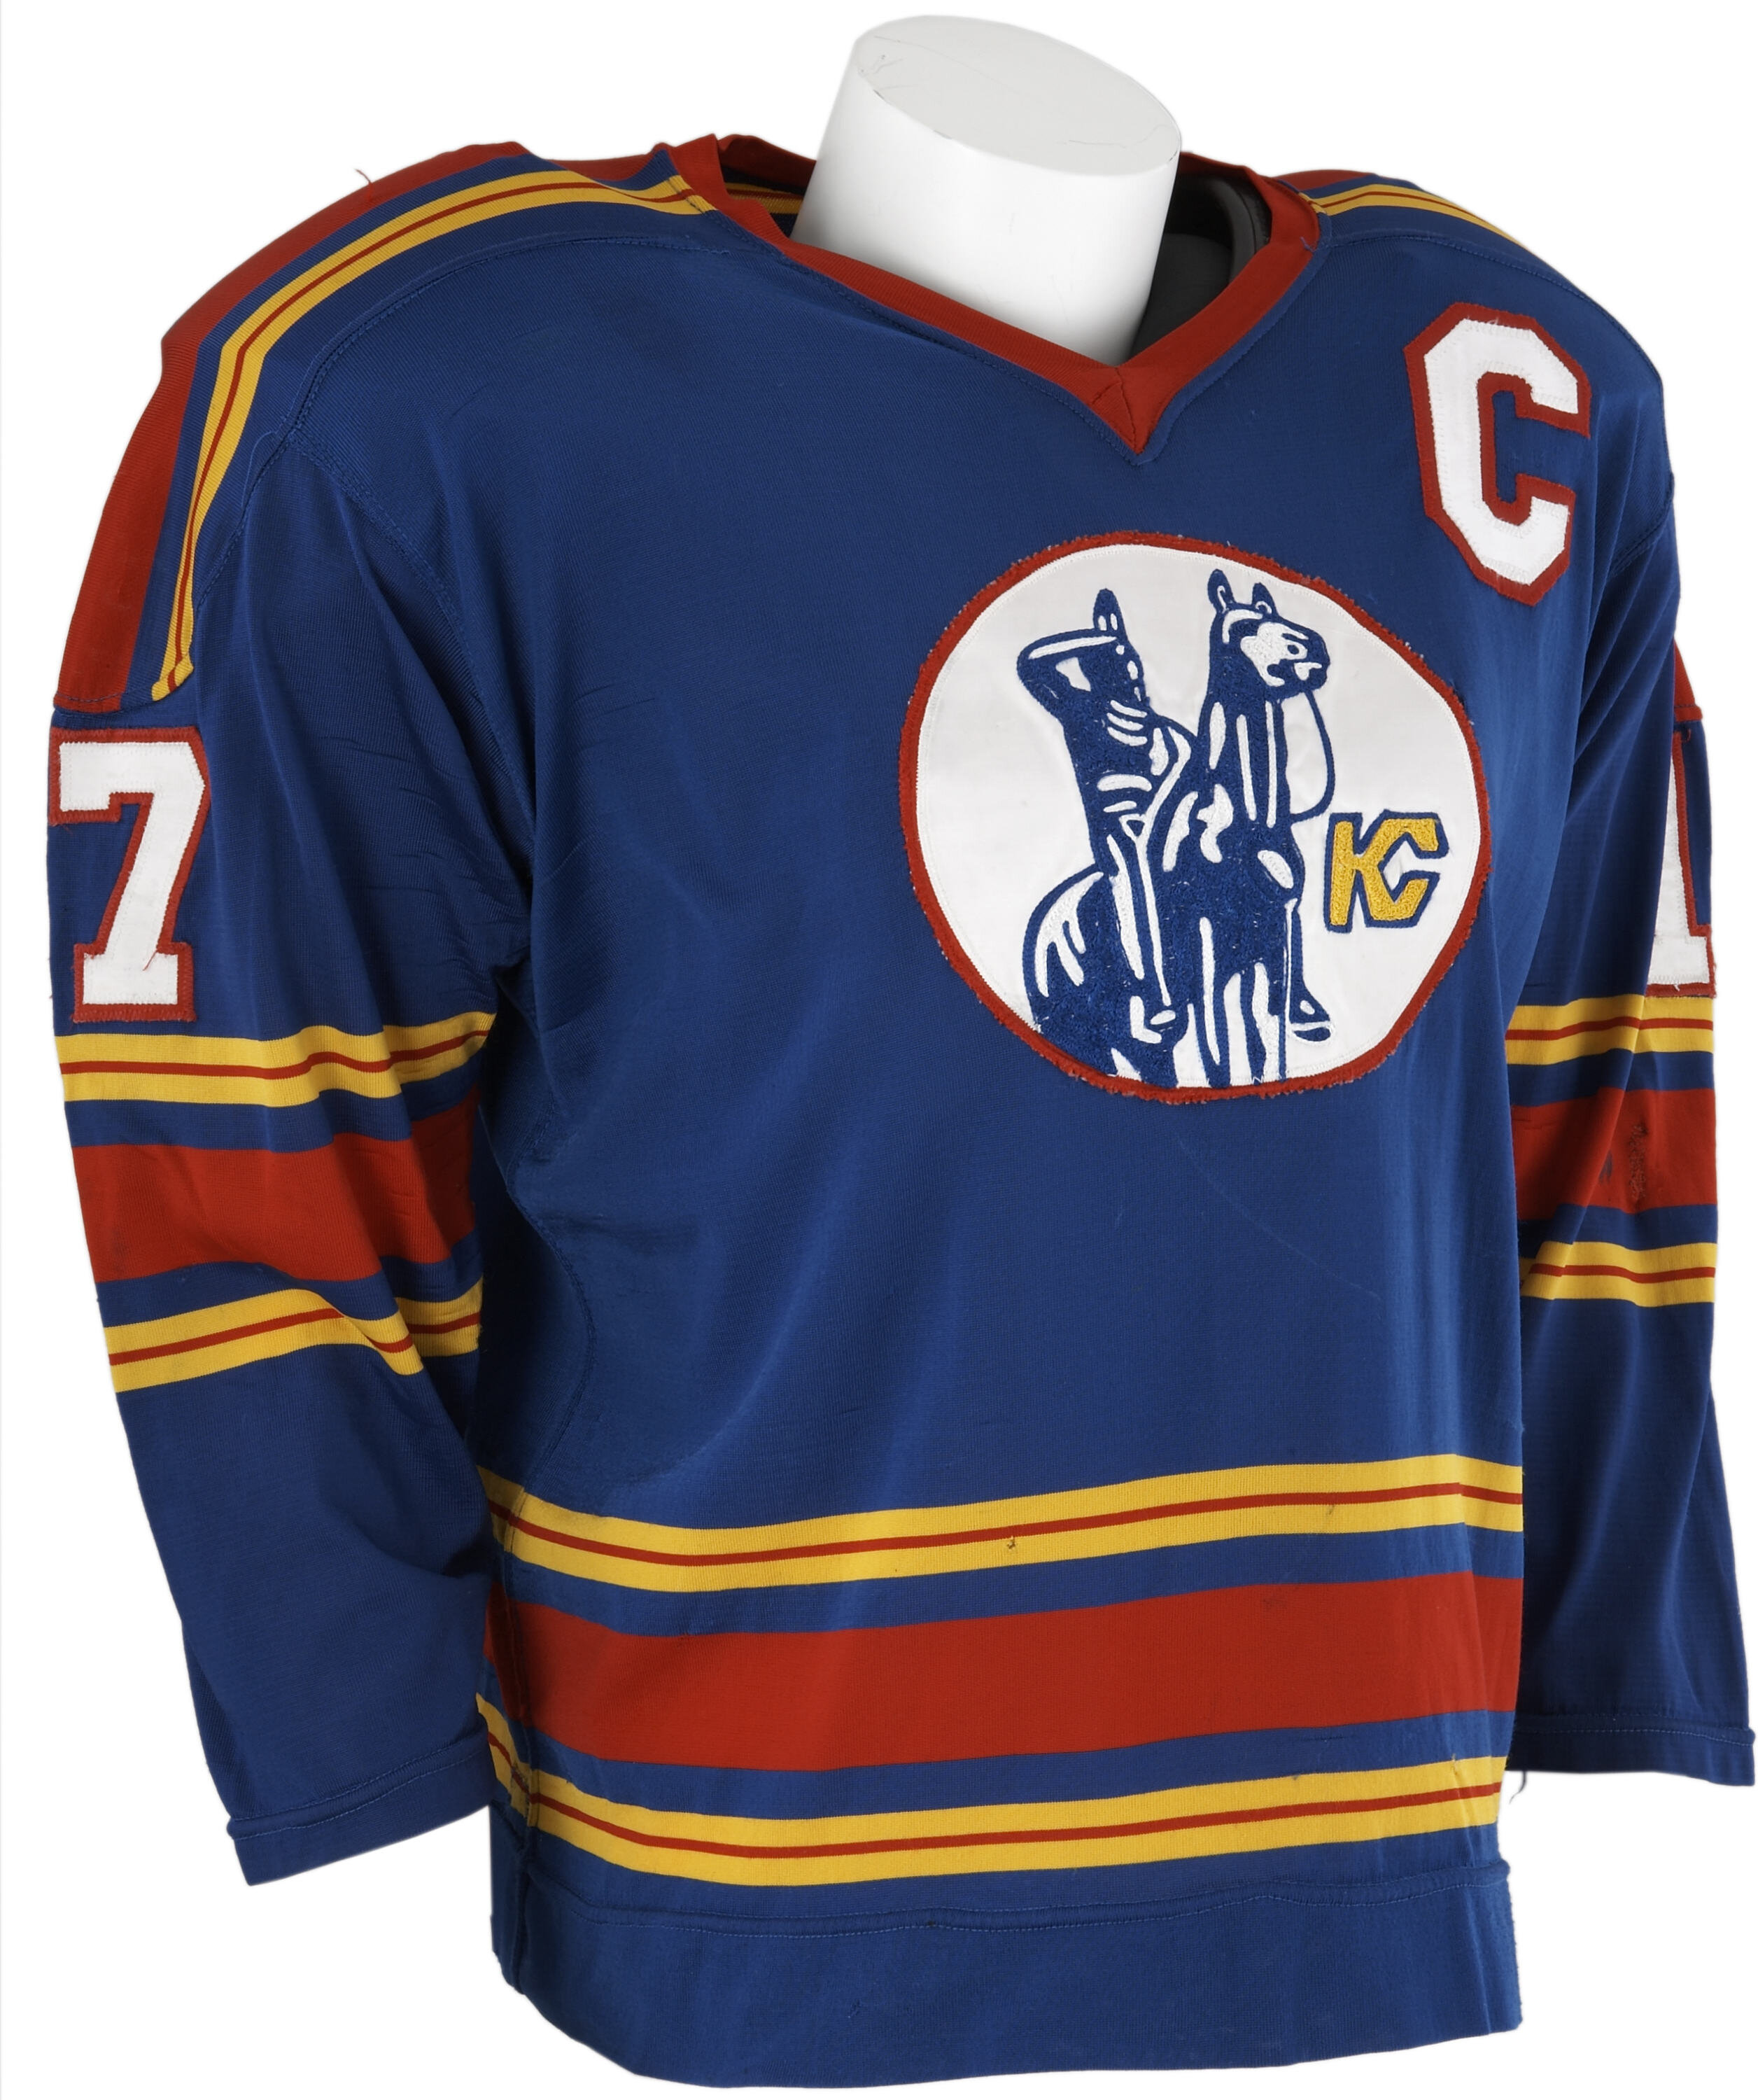 Late 1960s Kansas City Blues #18 Game Worn Jersey. Hockey